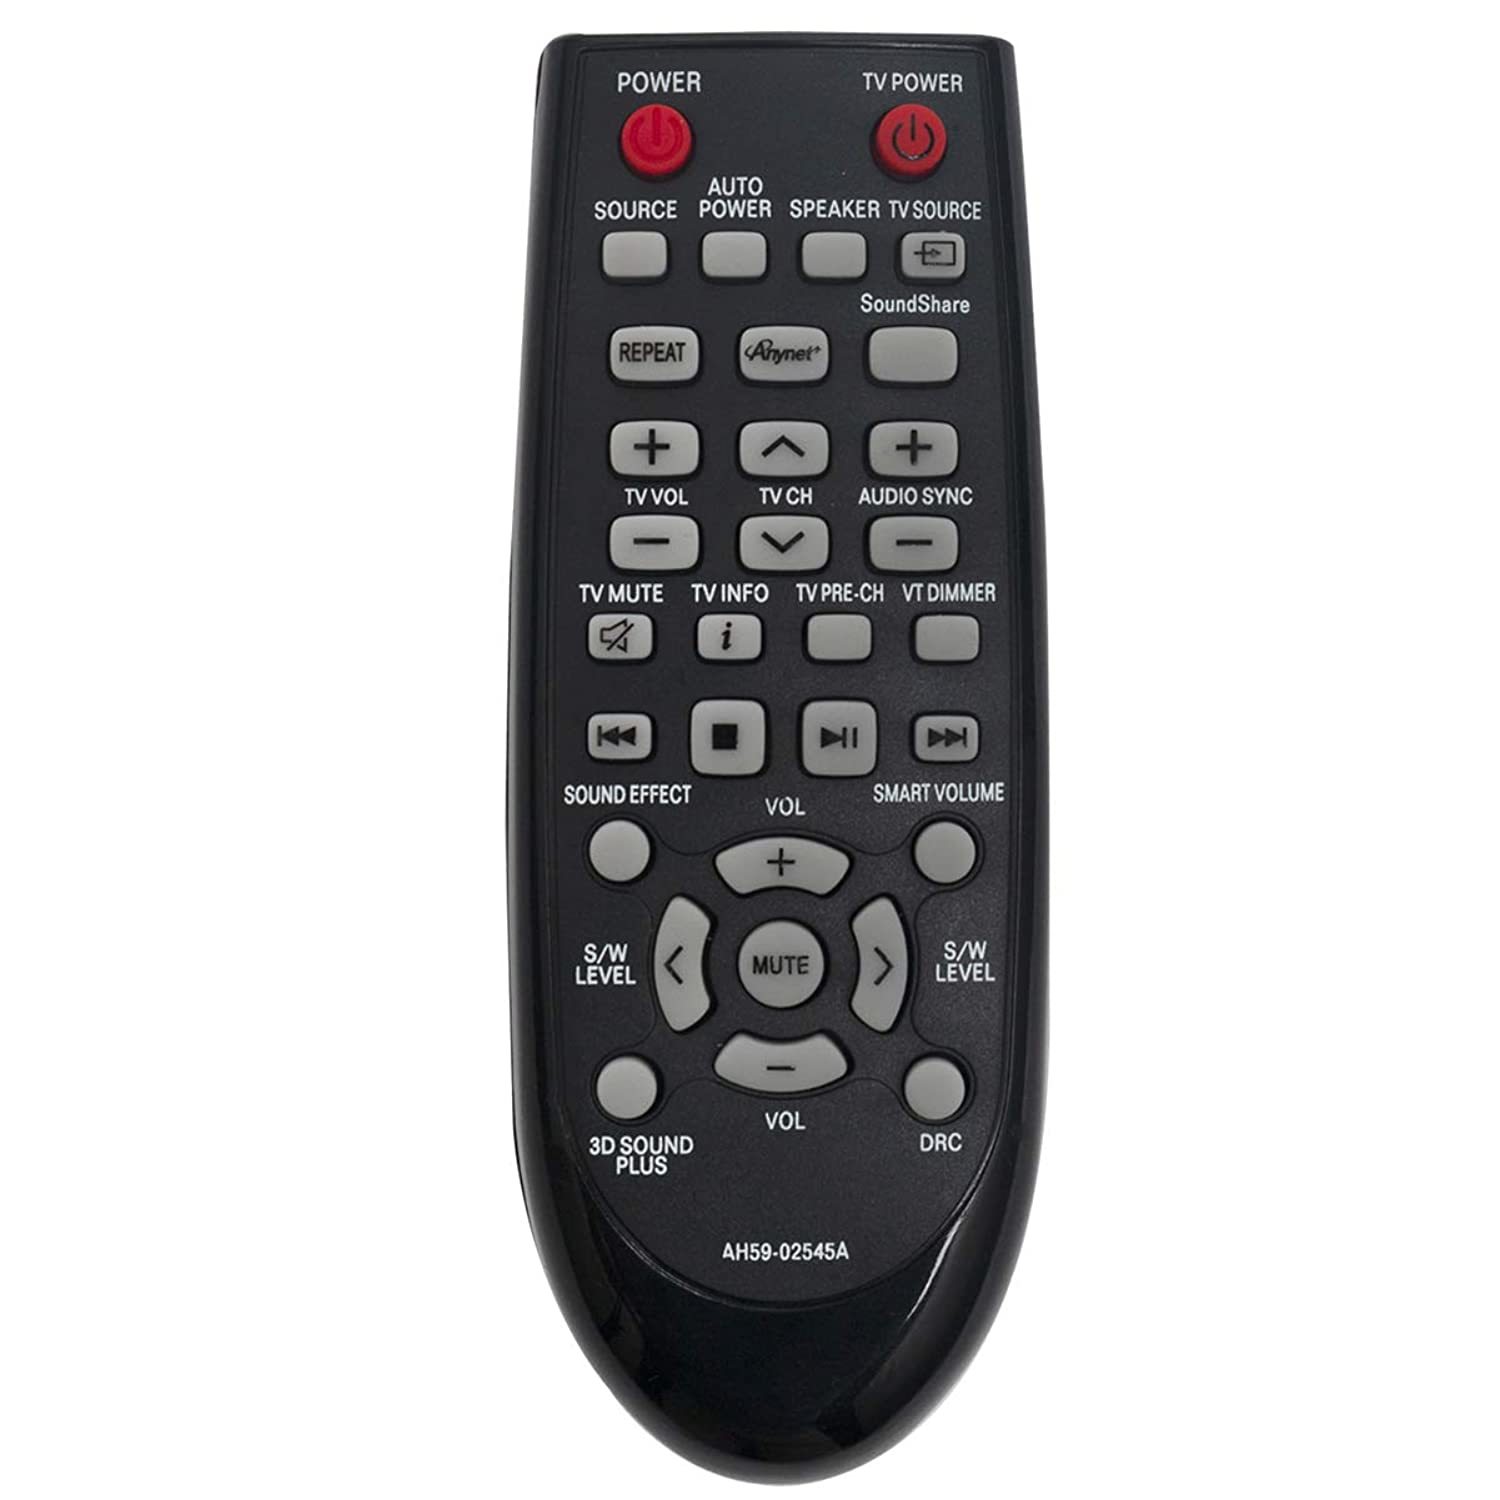 Ah59-02545A Replacement Remote Control Applicable For Samsung Soundbar Hw-F750 H